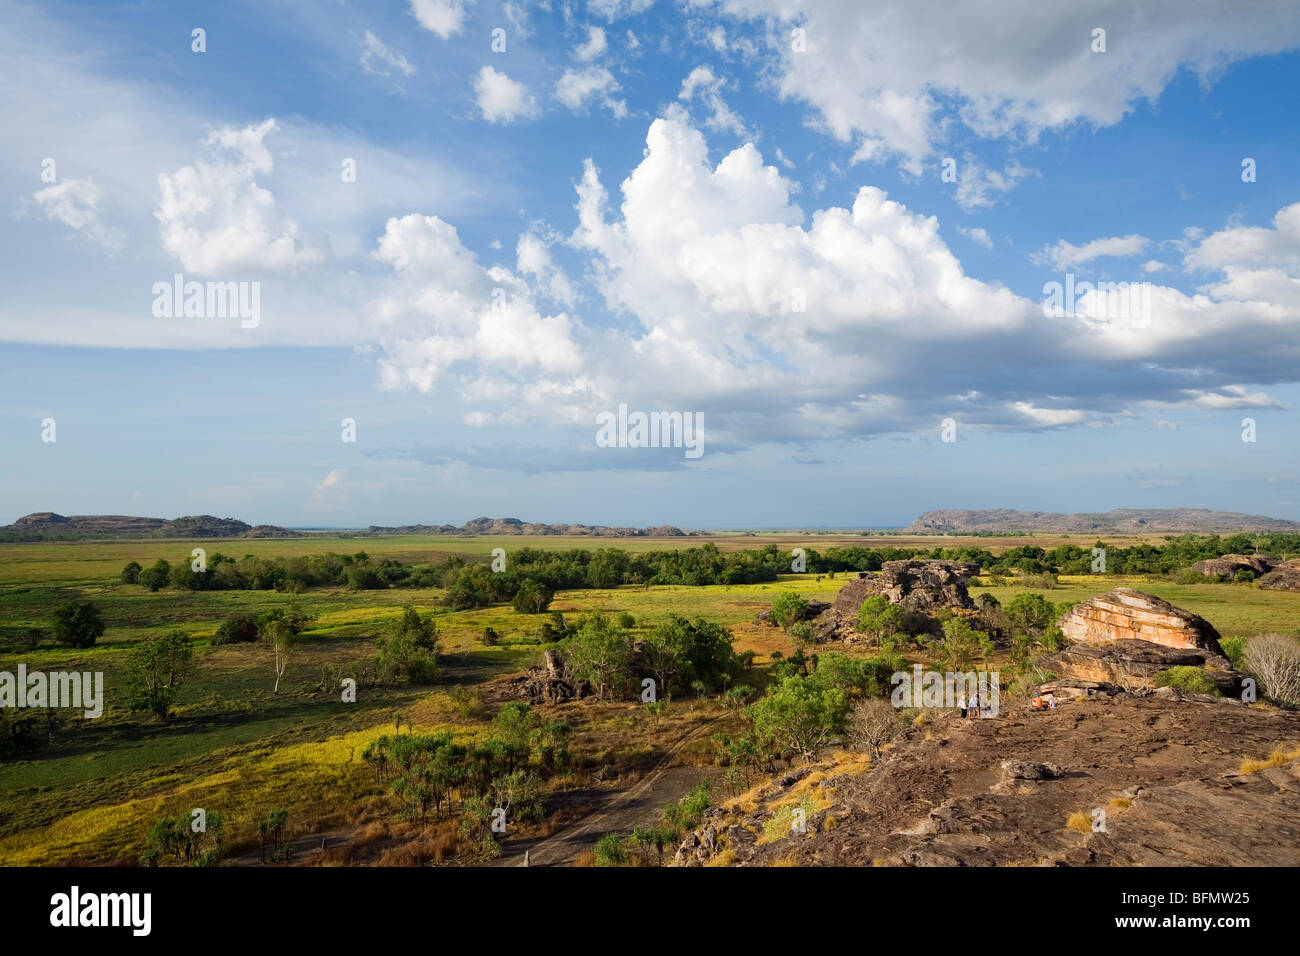 Australia, Northern Territory, Kakadu National Park. View over the Nadab floodplain from the Aboriginal site of Ubirr. (PR) Stock Photo